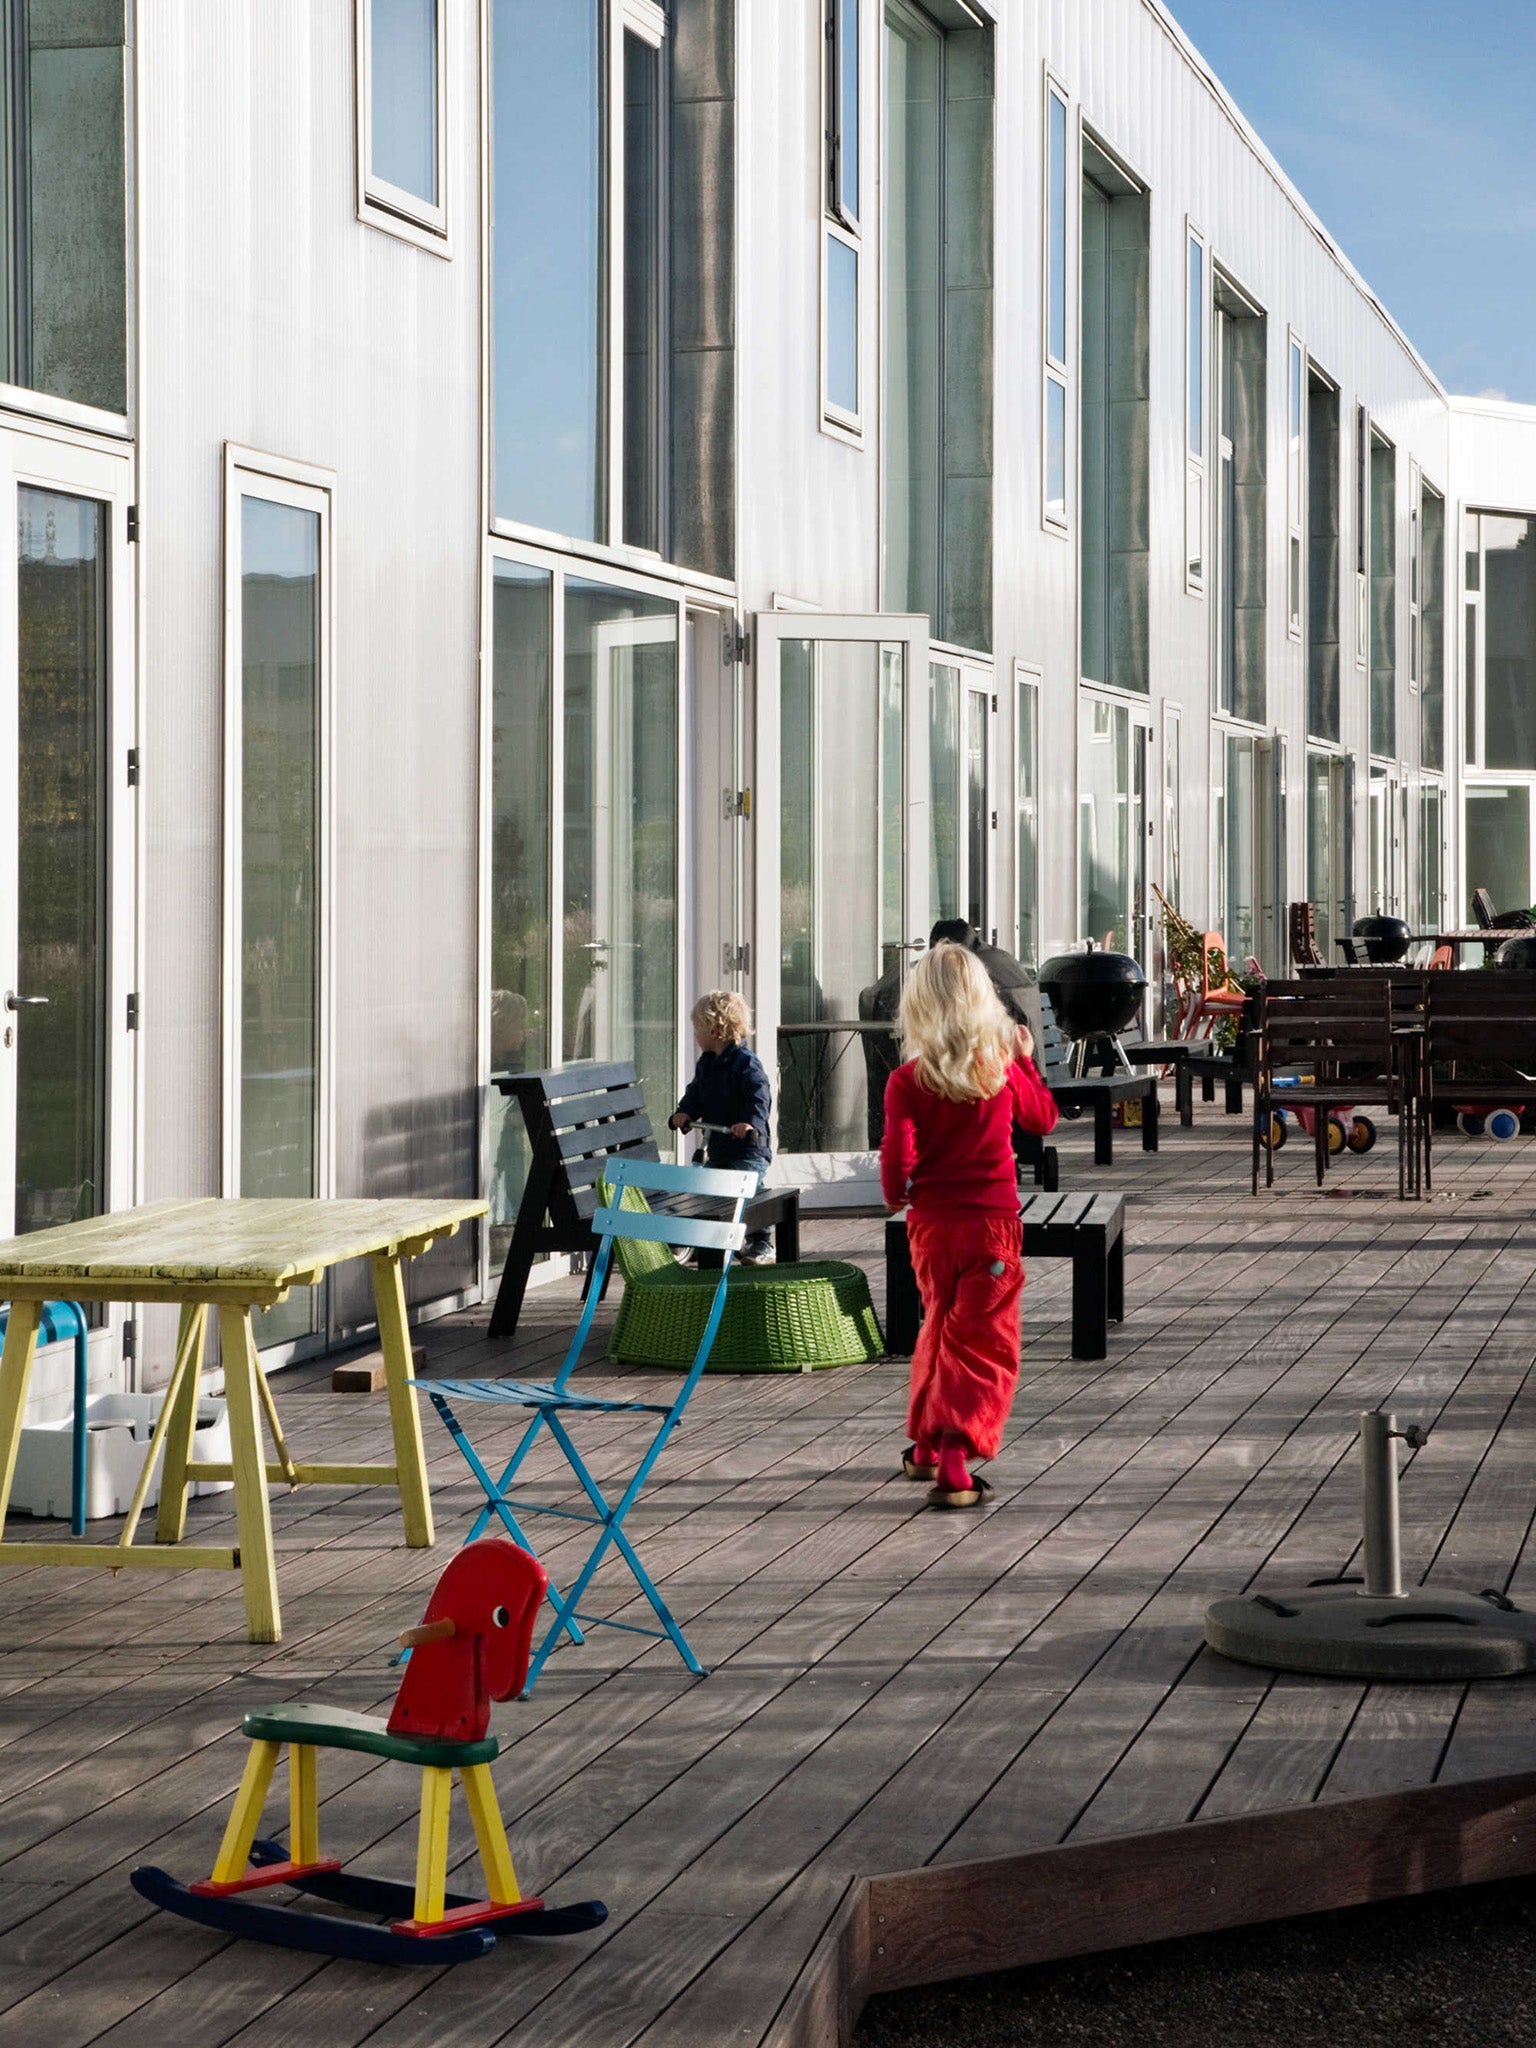 Great Danes: cohousing started in Denmark